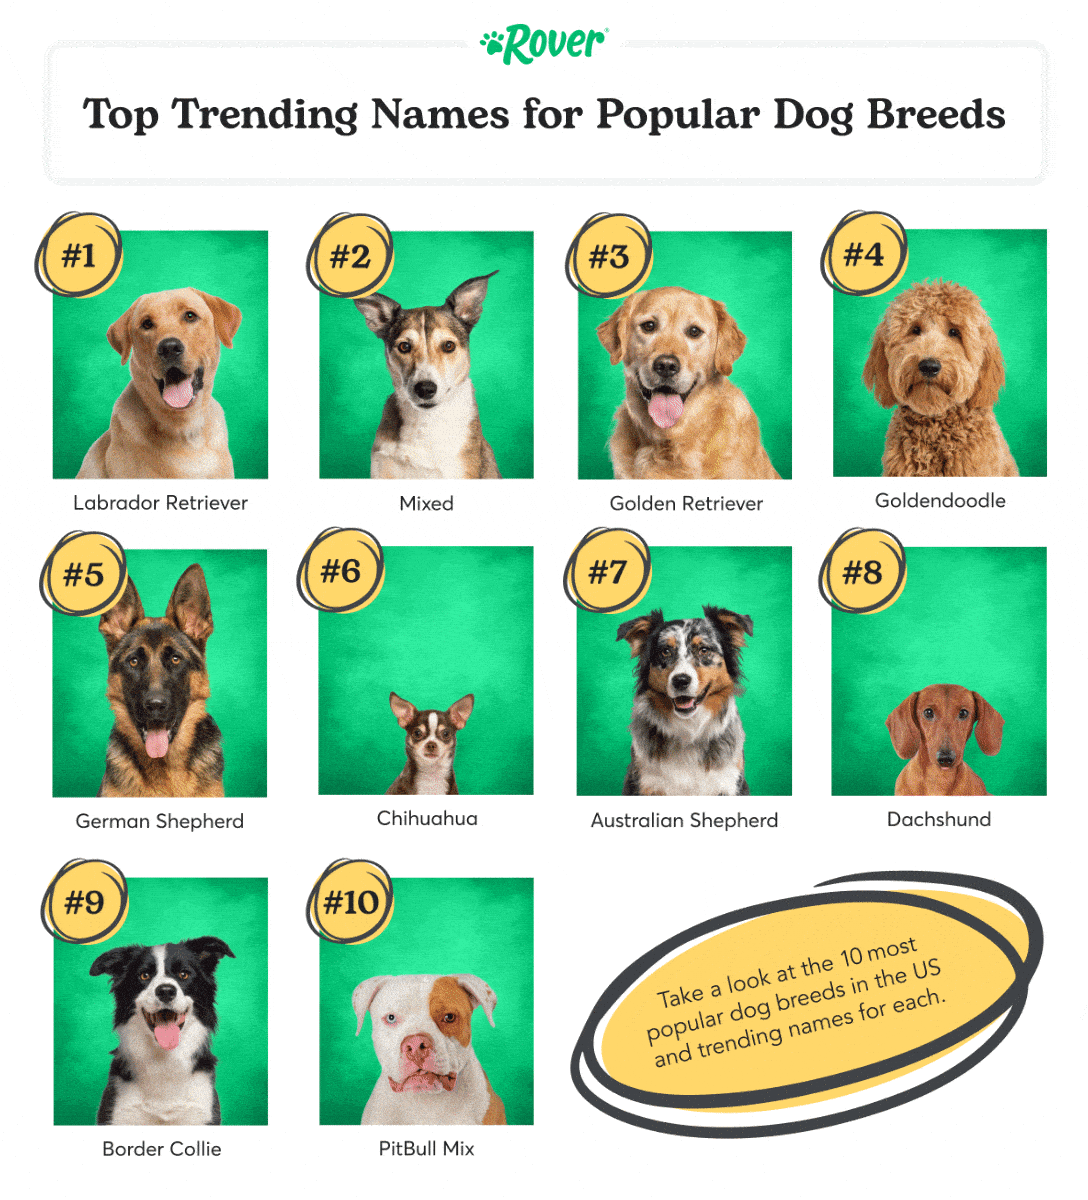 Top Trending Names for Popular Dog Breeds